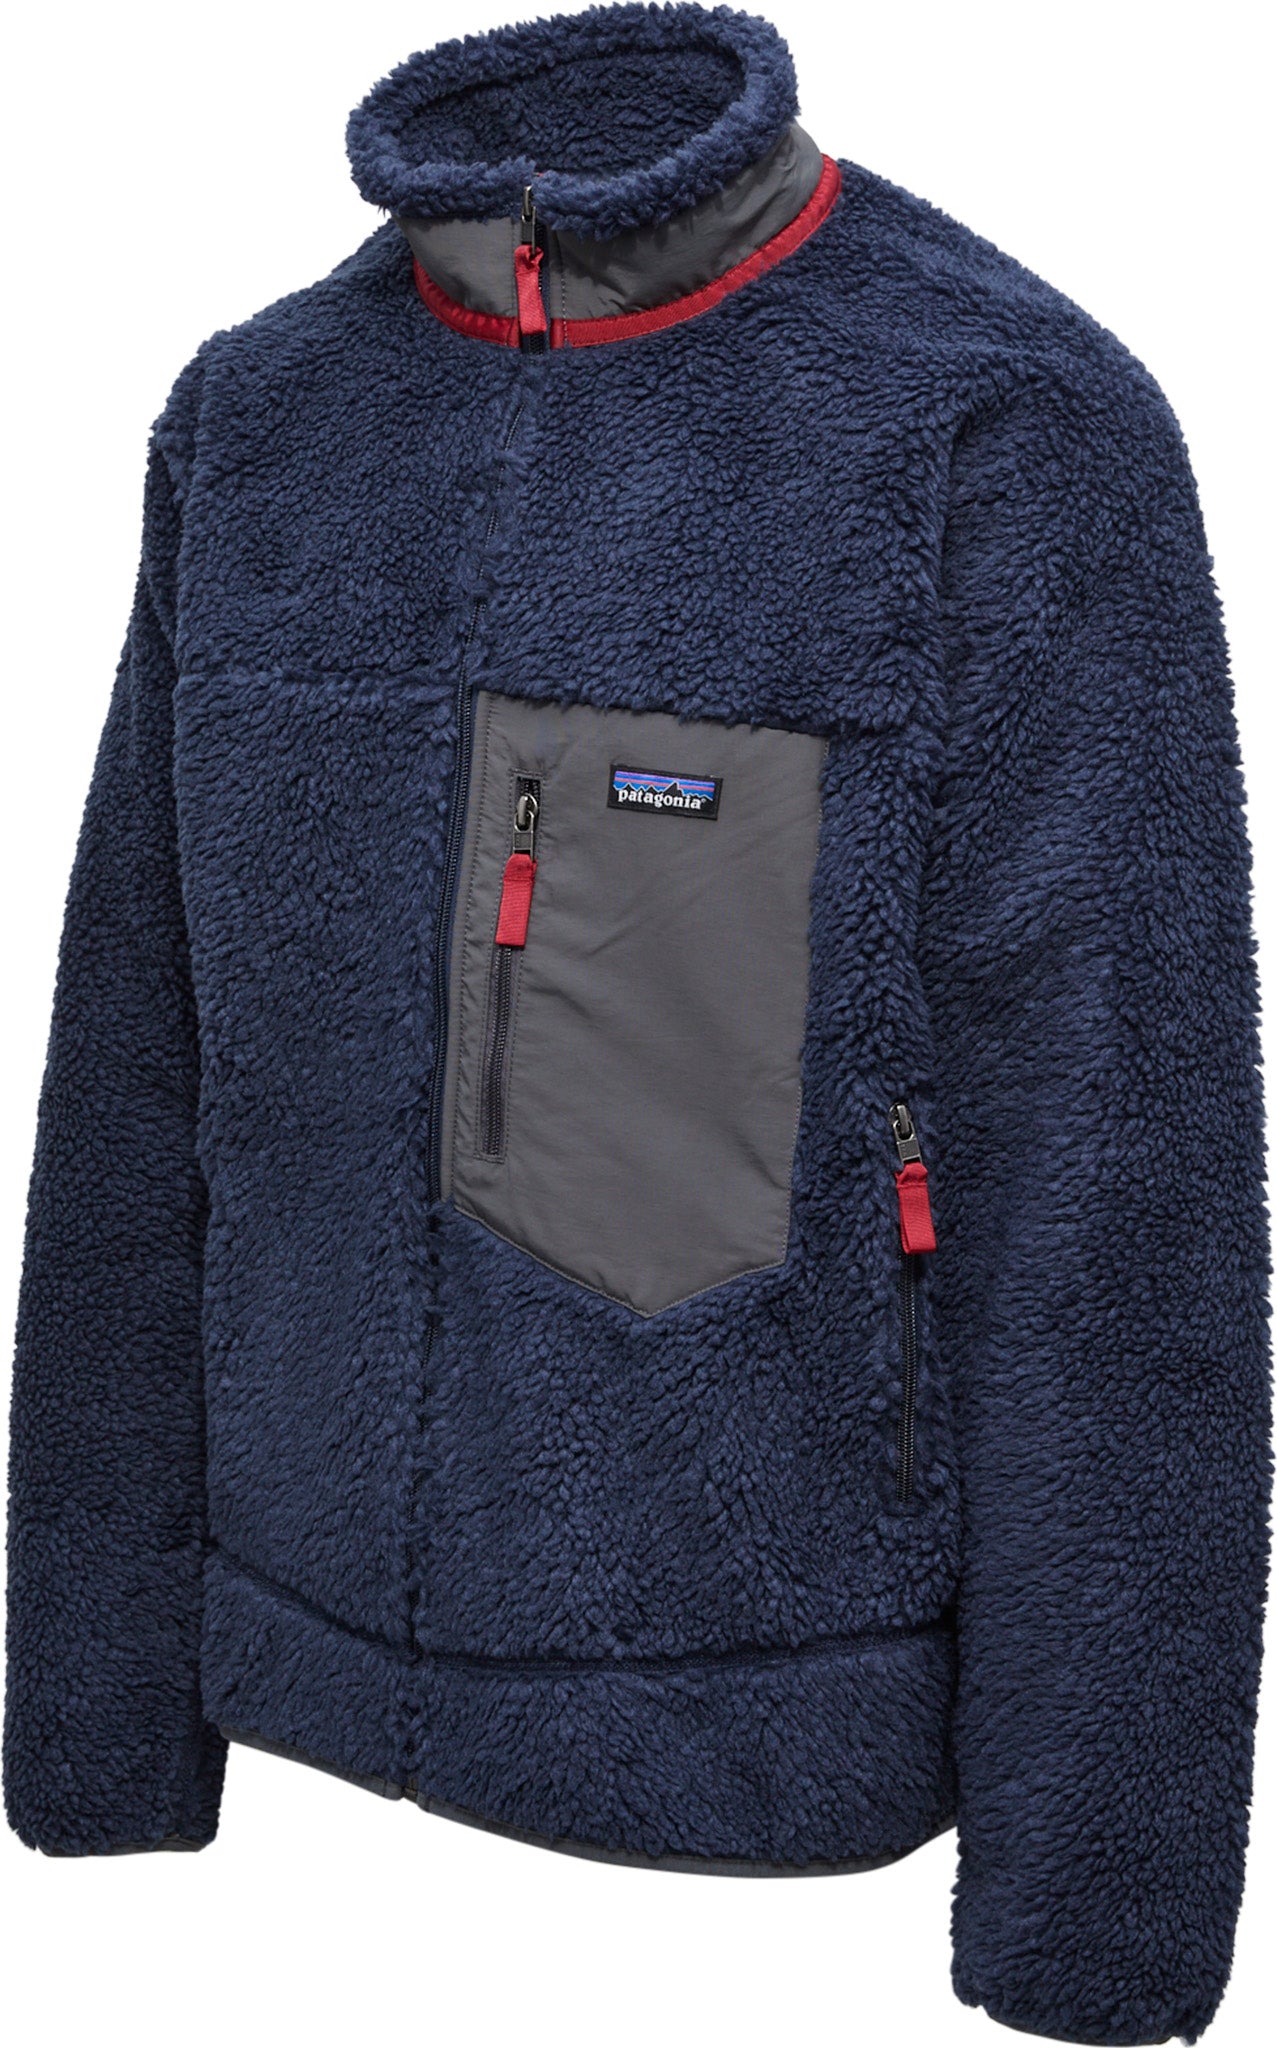 Patagonia Classic Retro-X® Fleece Jacket - Men's | Altitude Sports